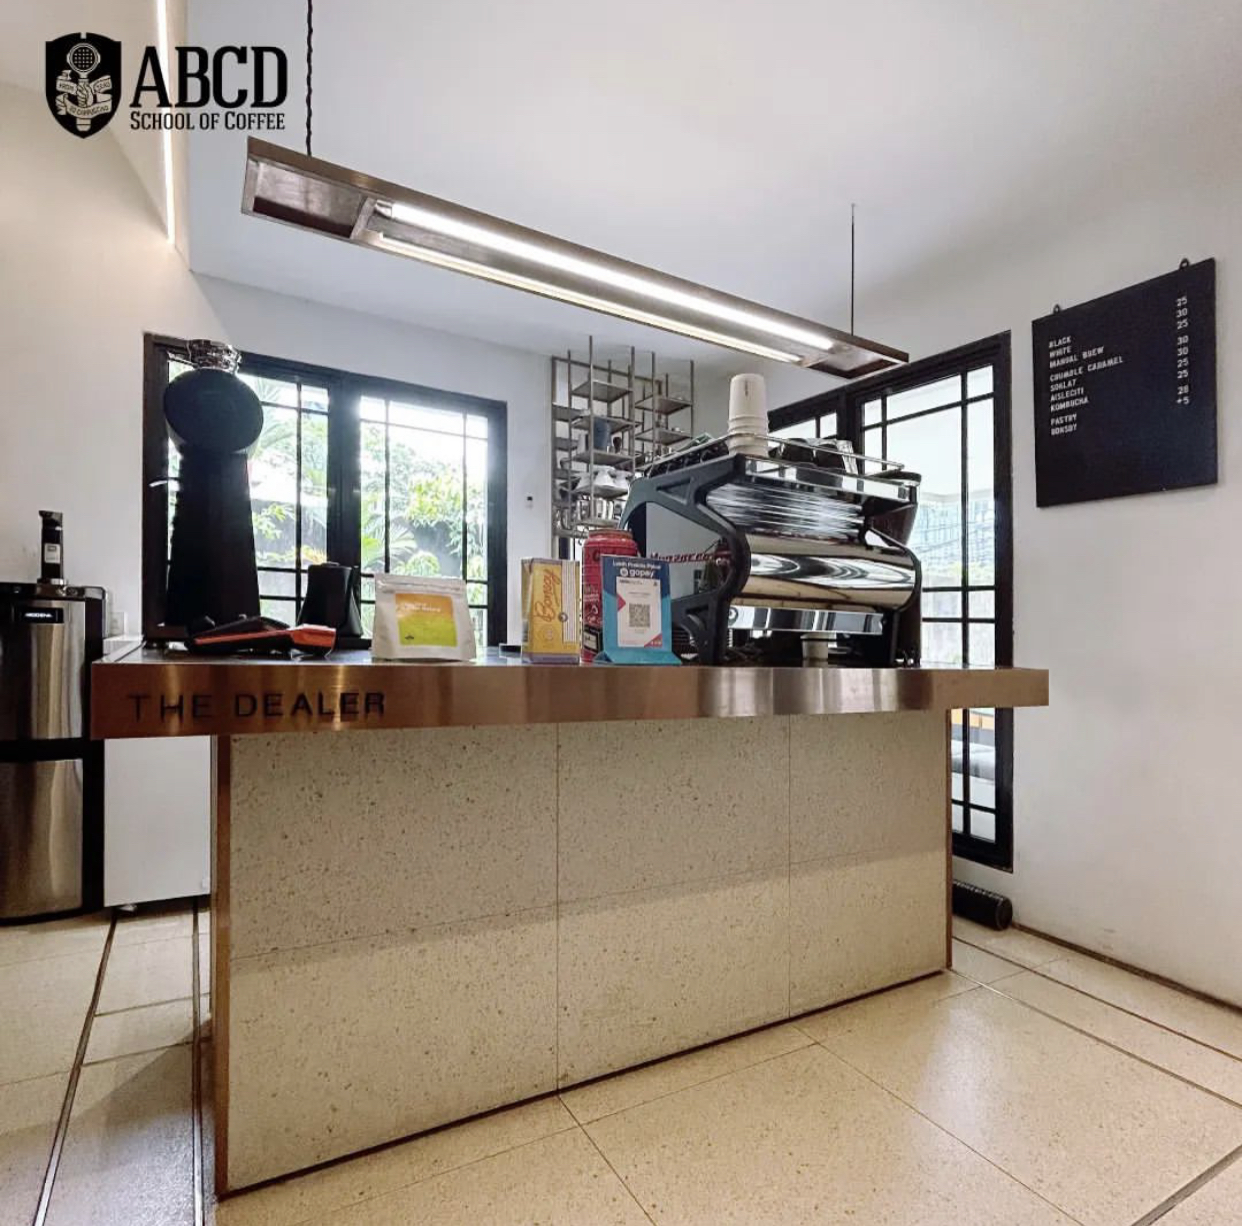 ABCD School of Coffee/The Dealer di Cikini (Instagram/@abcd_coffee)